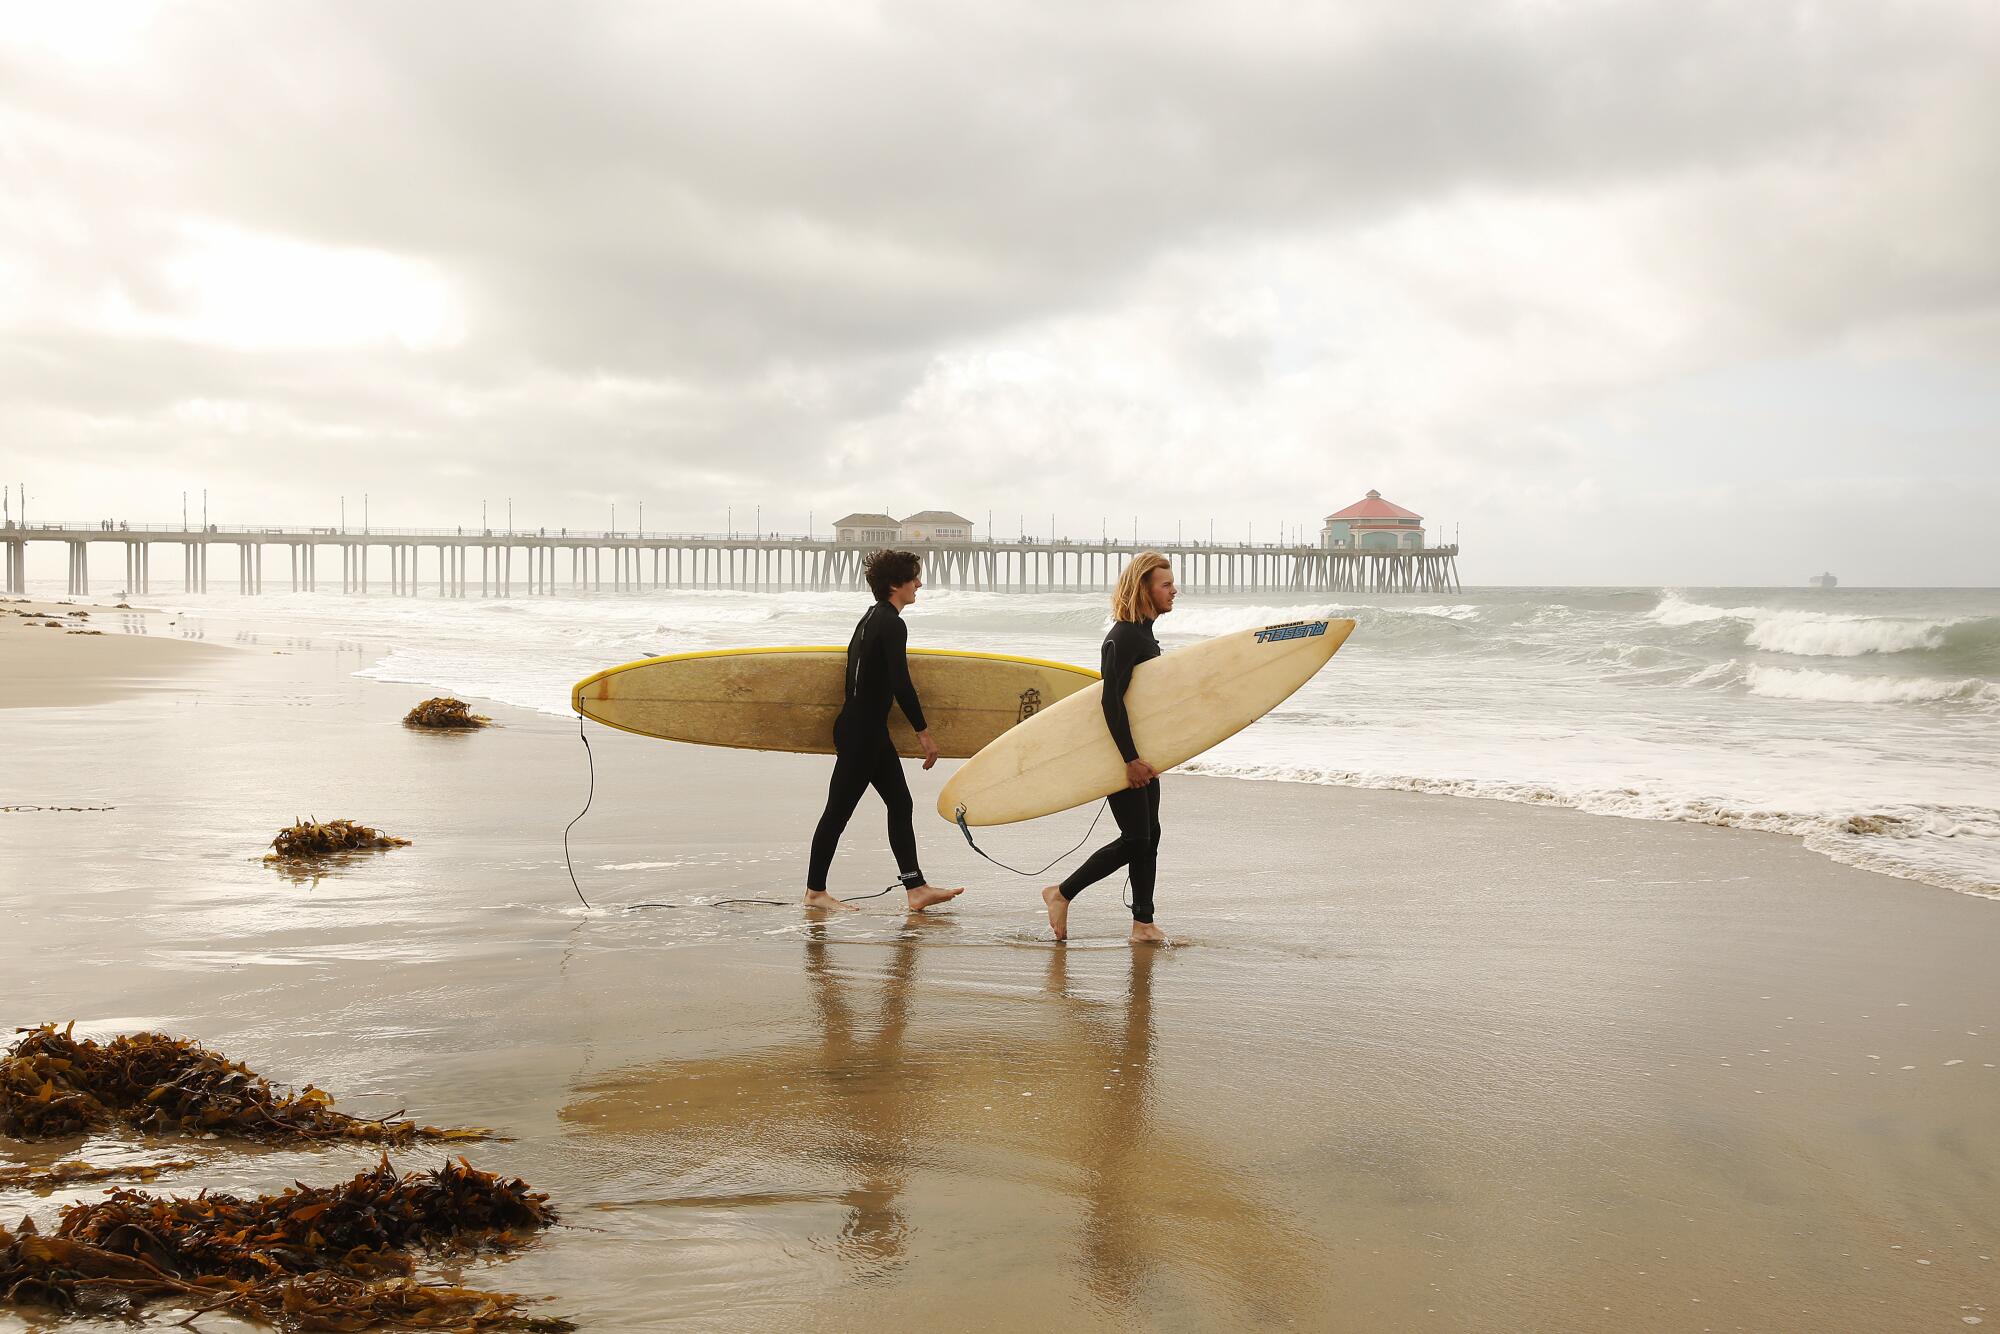 Surfers walk on the wet sand, toward the ocean